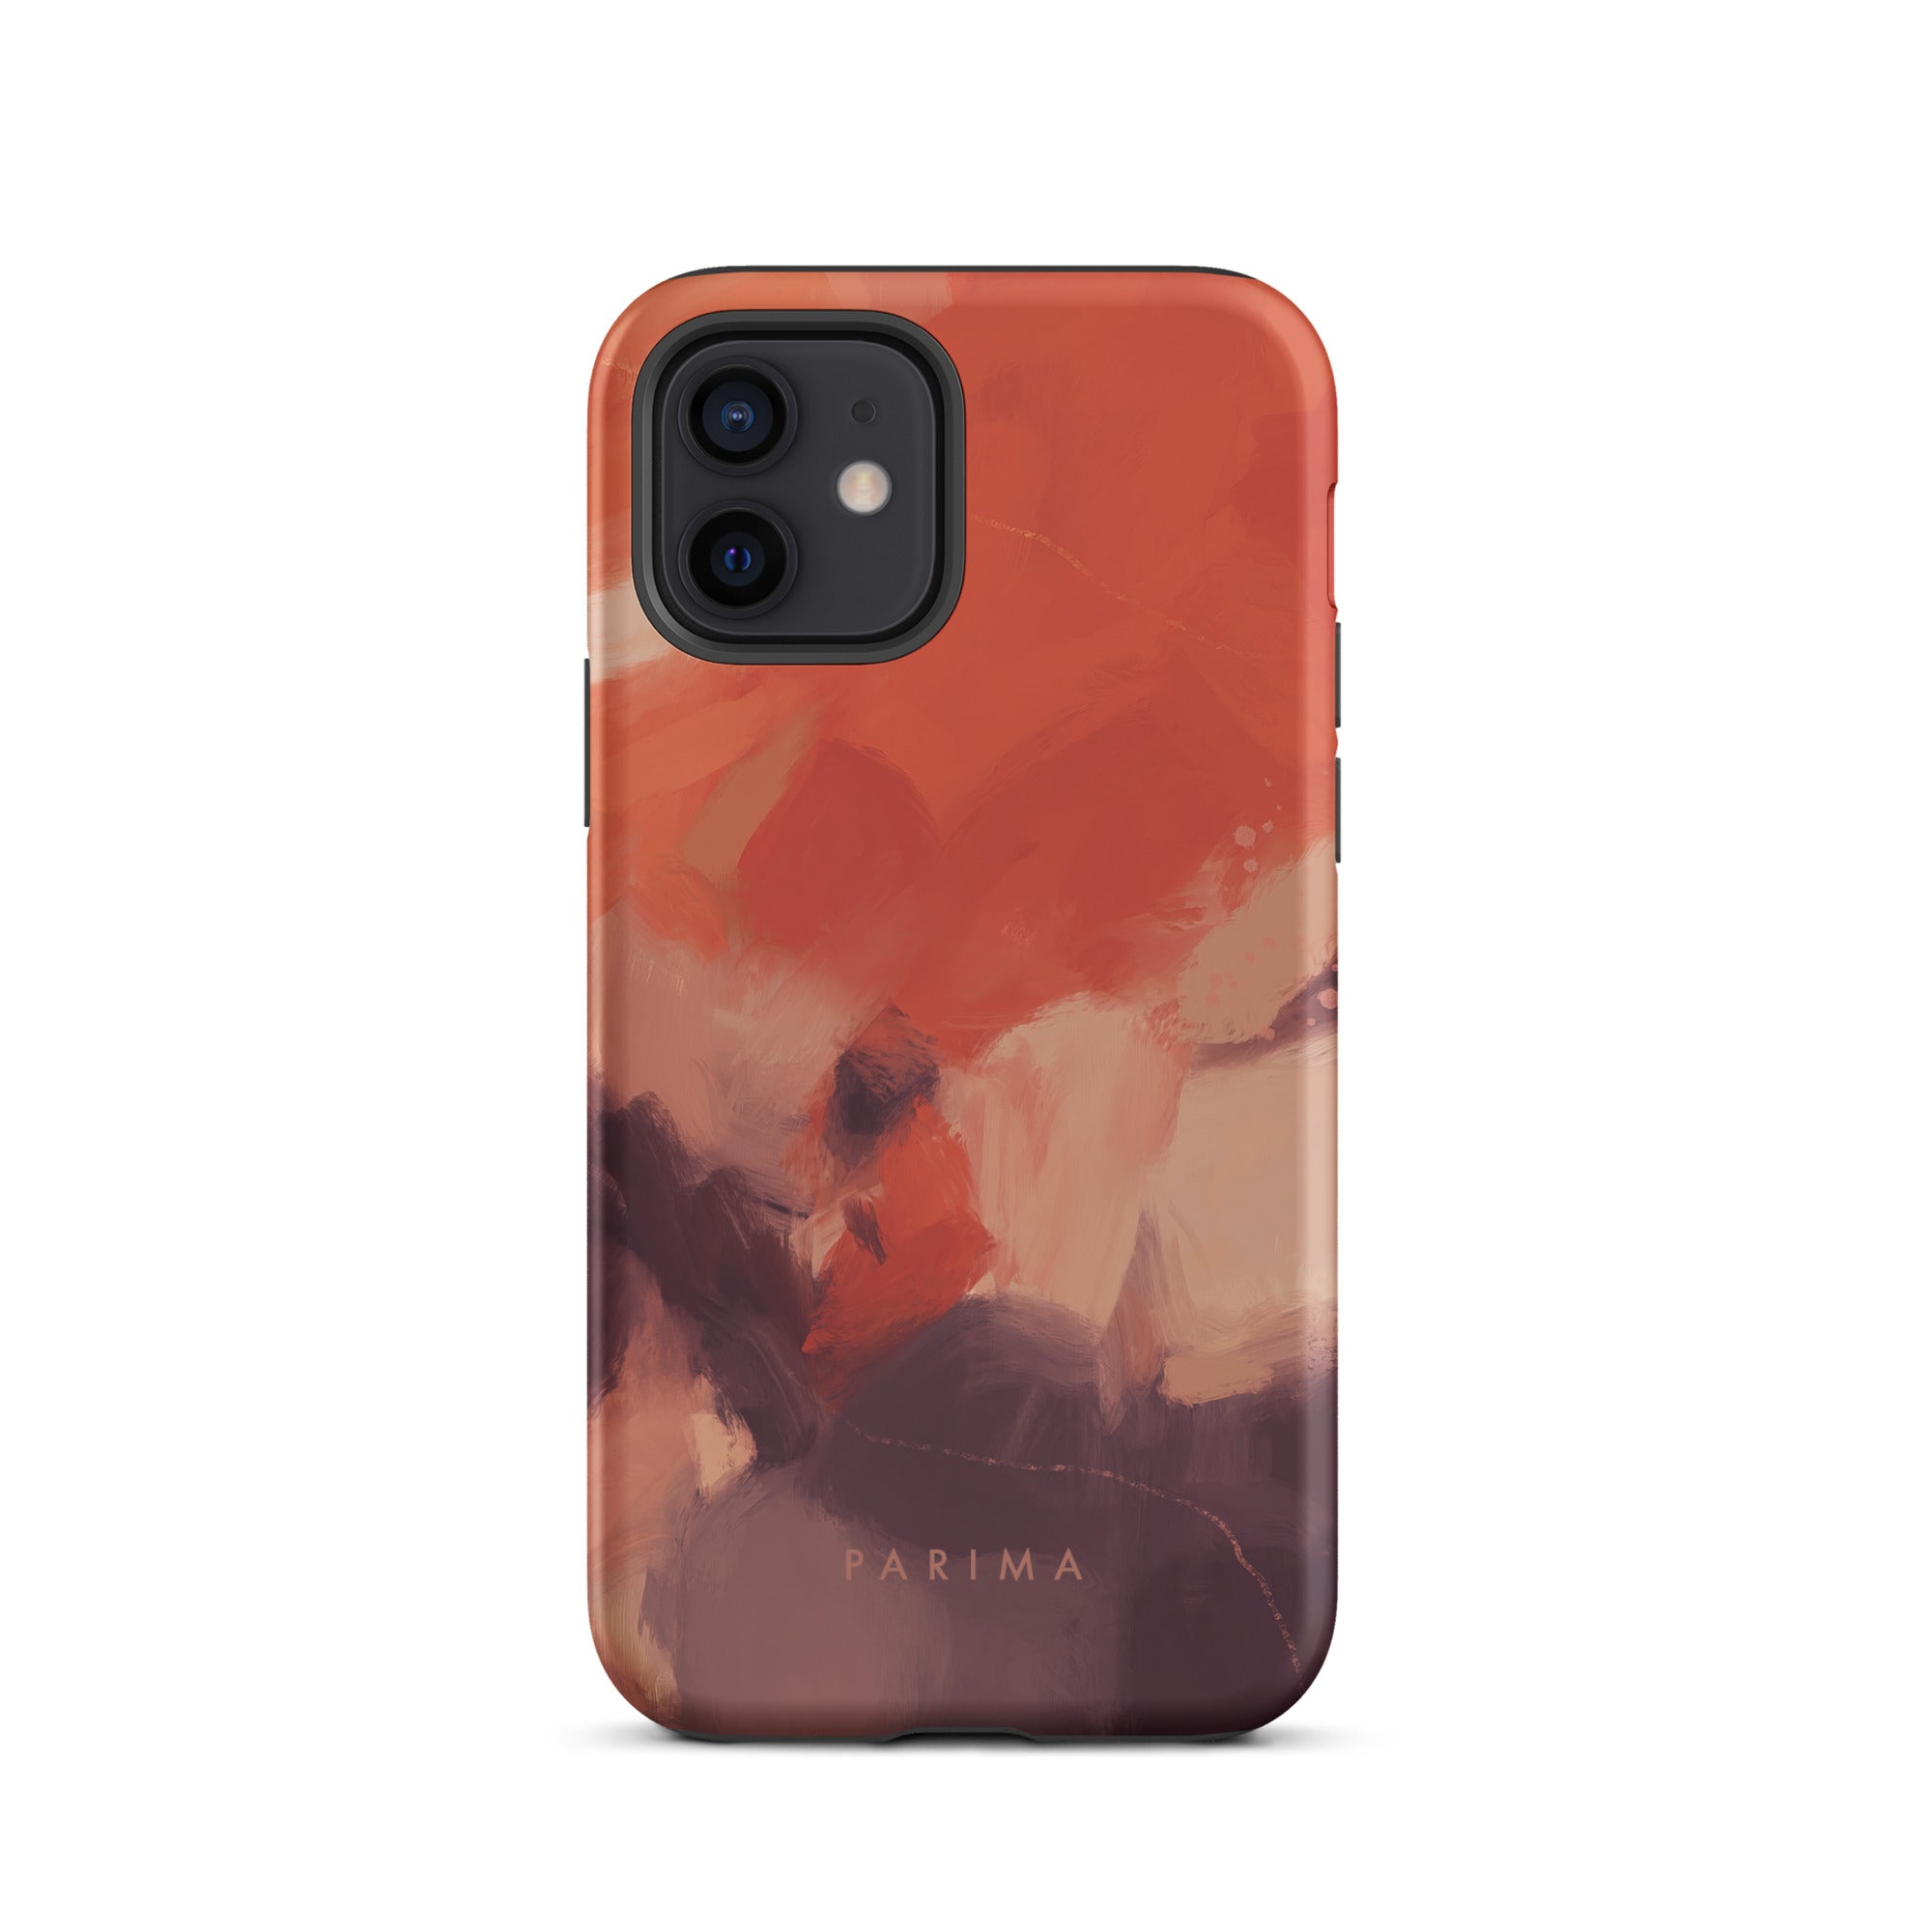 Autumn, orange and purple abstract art - iPhone 12 tough case by Parima Studio